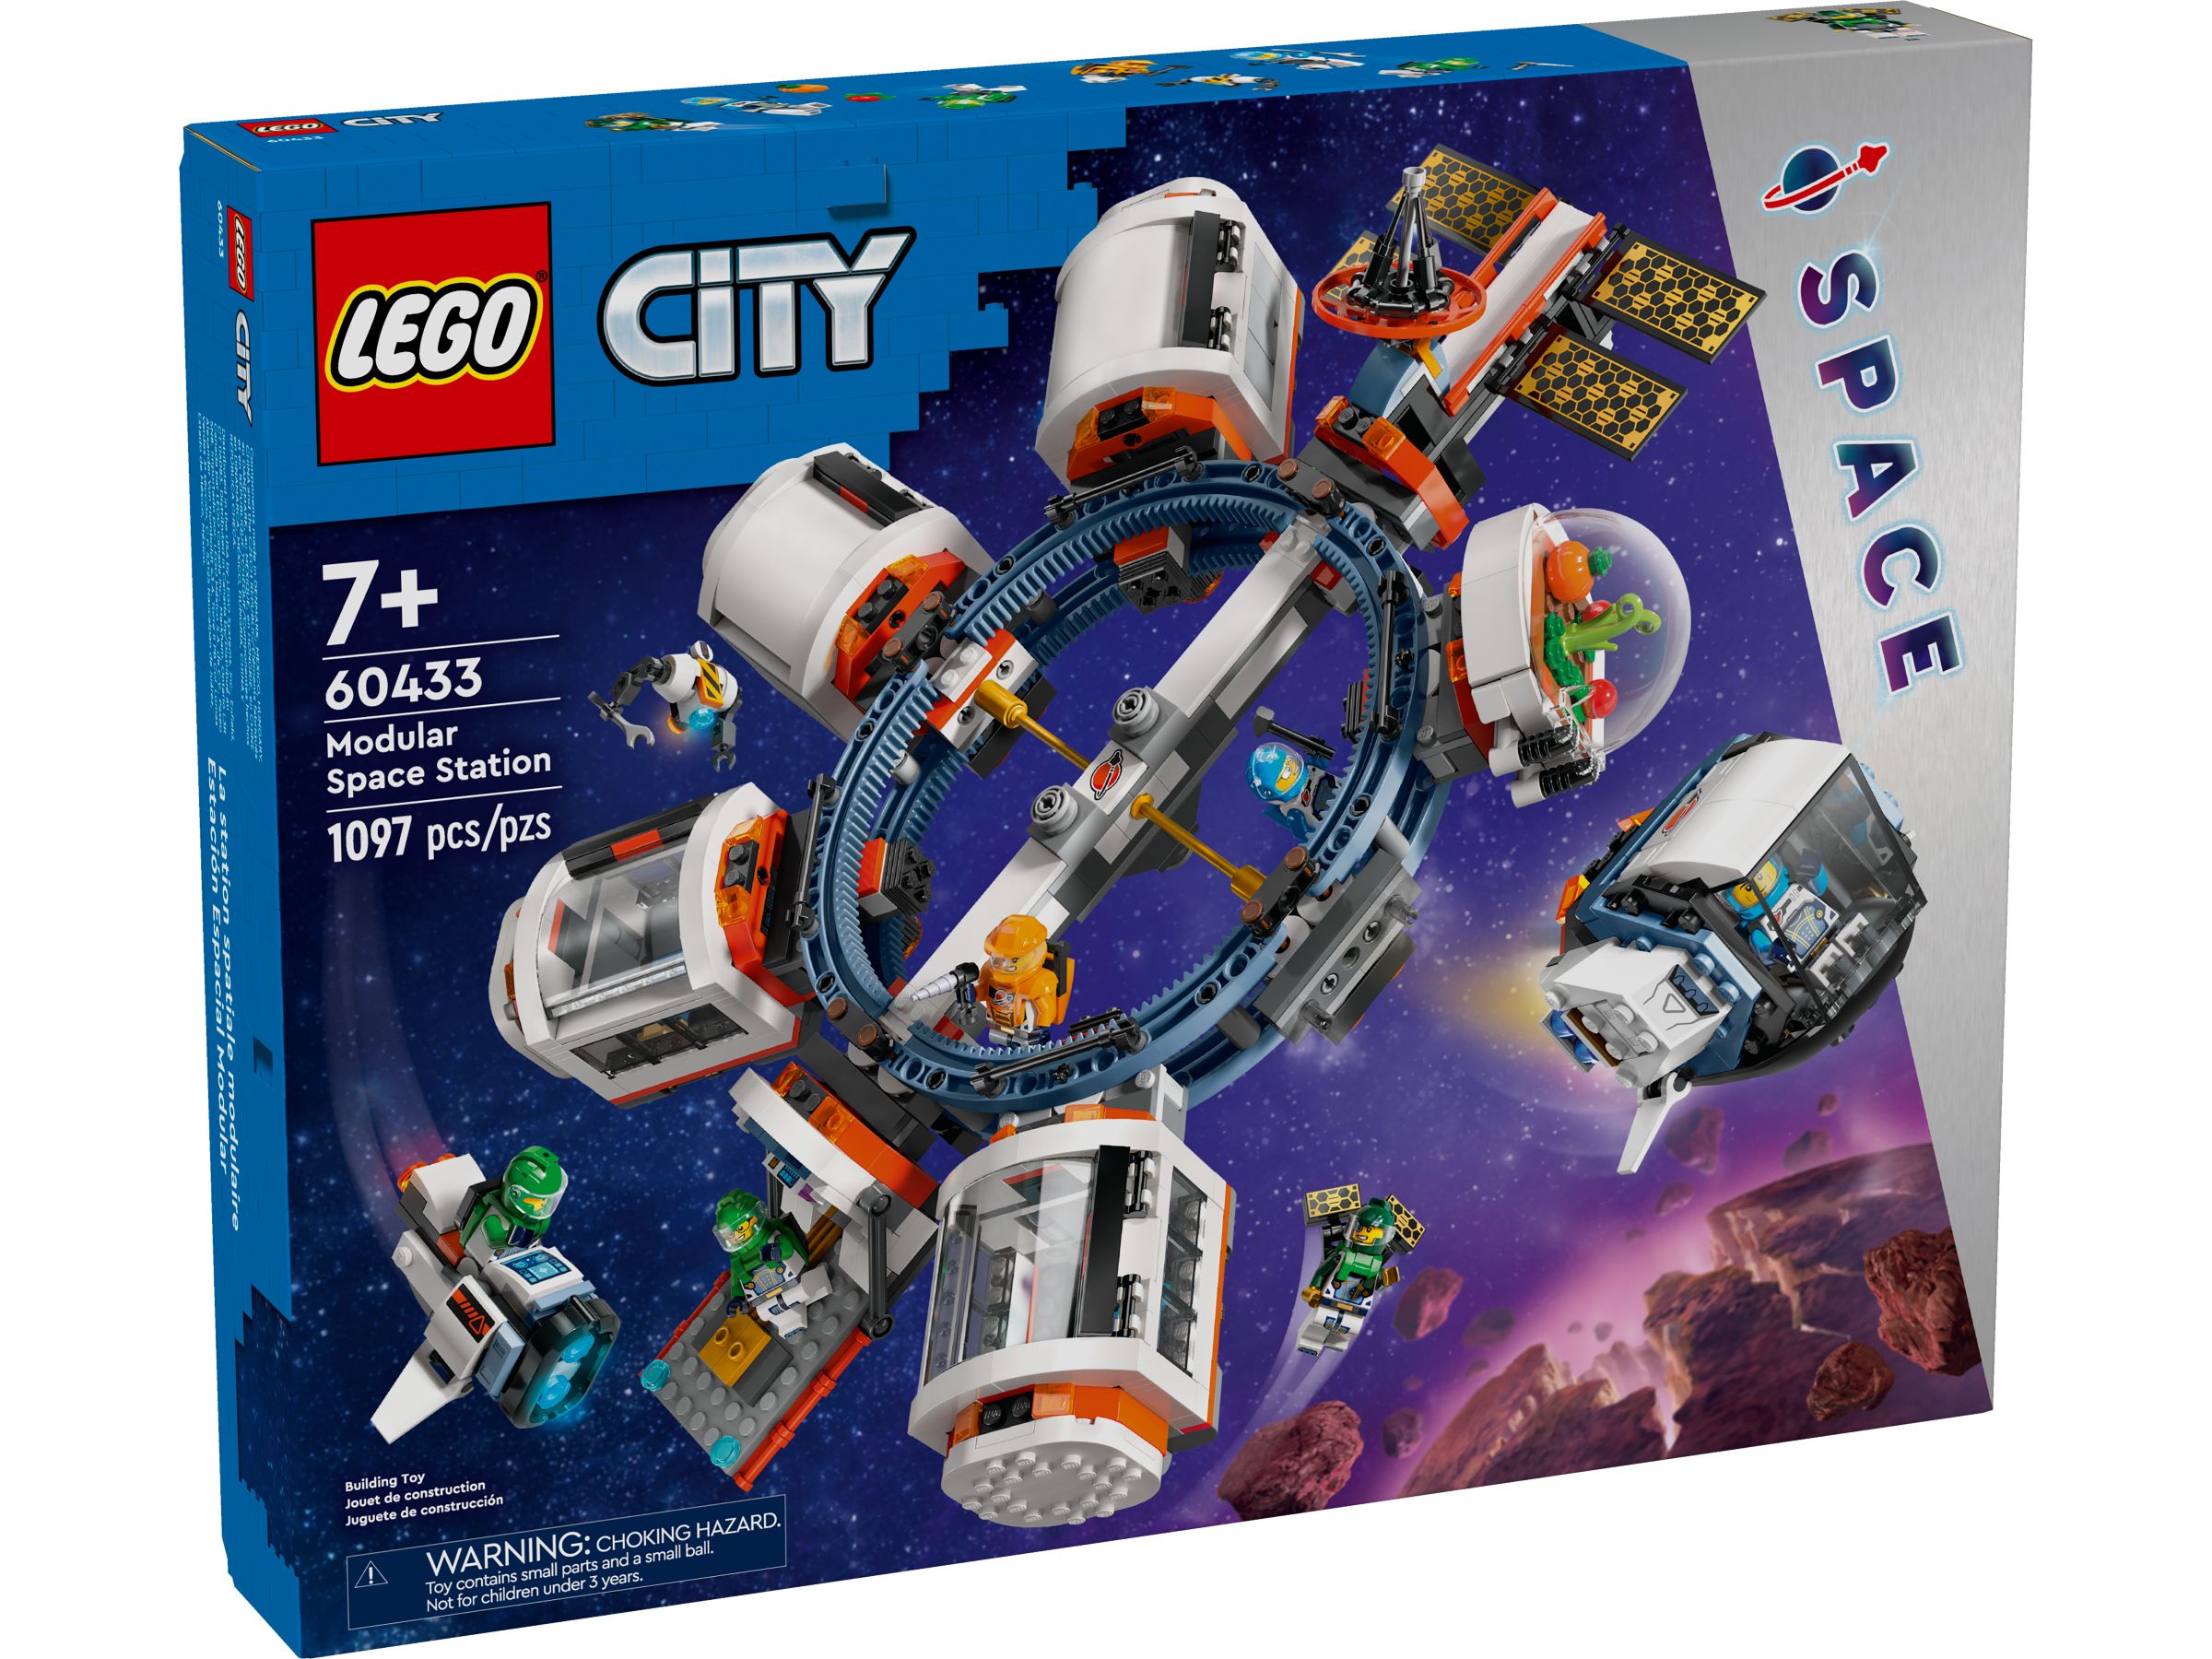 LEGO City 60433 Modulare Raumstation LEGO_60433_Box1_v39.jpg